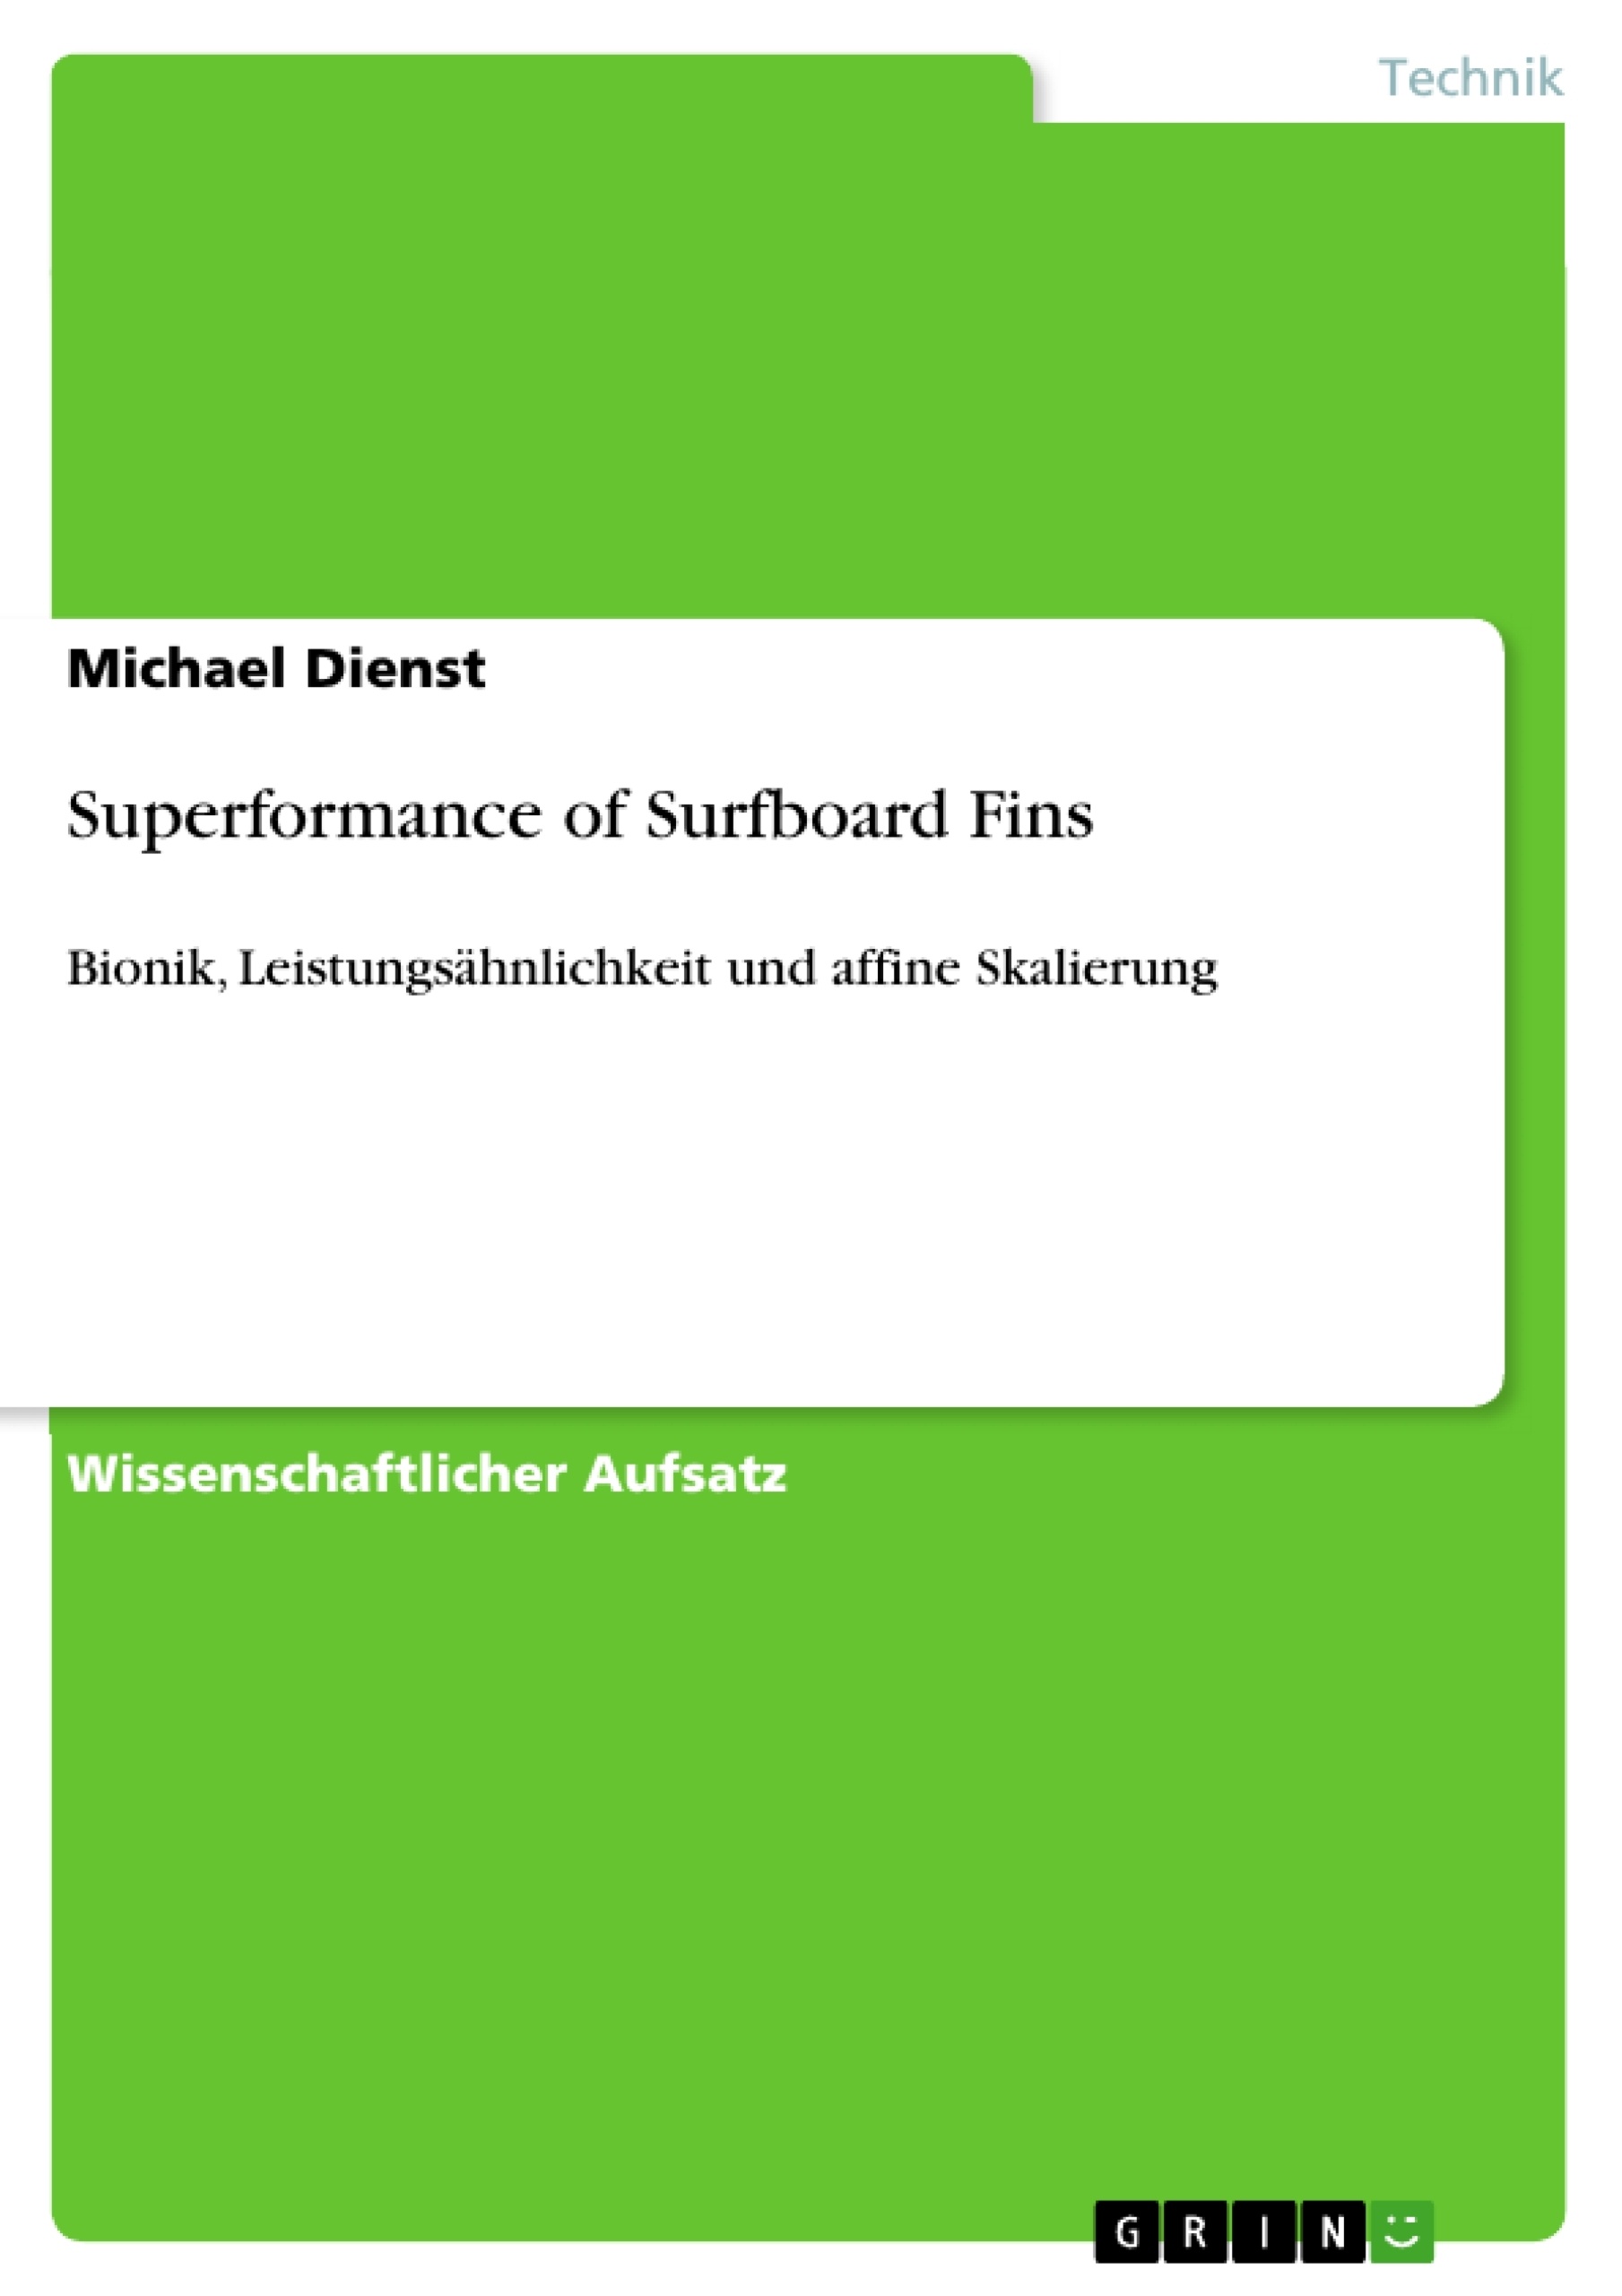 Title: Superformance of Surfboard Fins